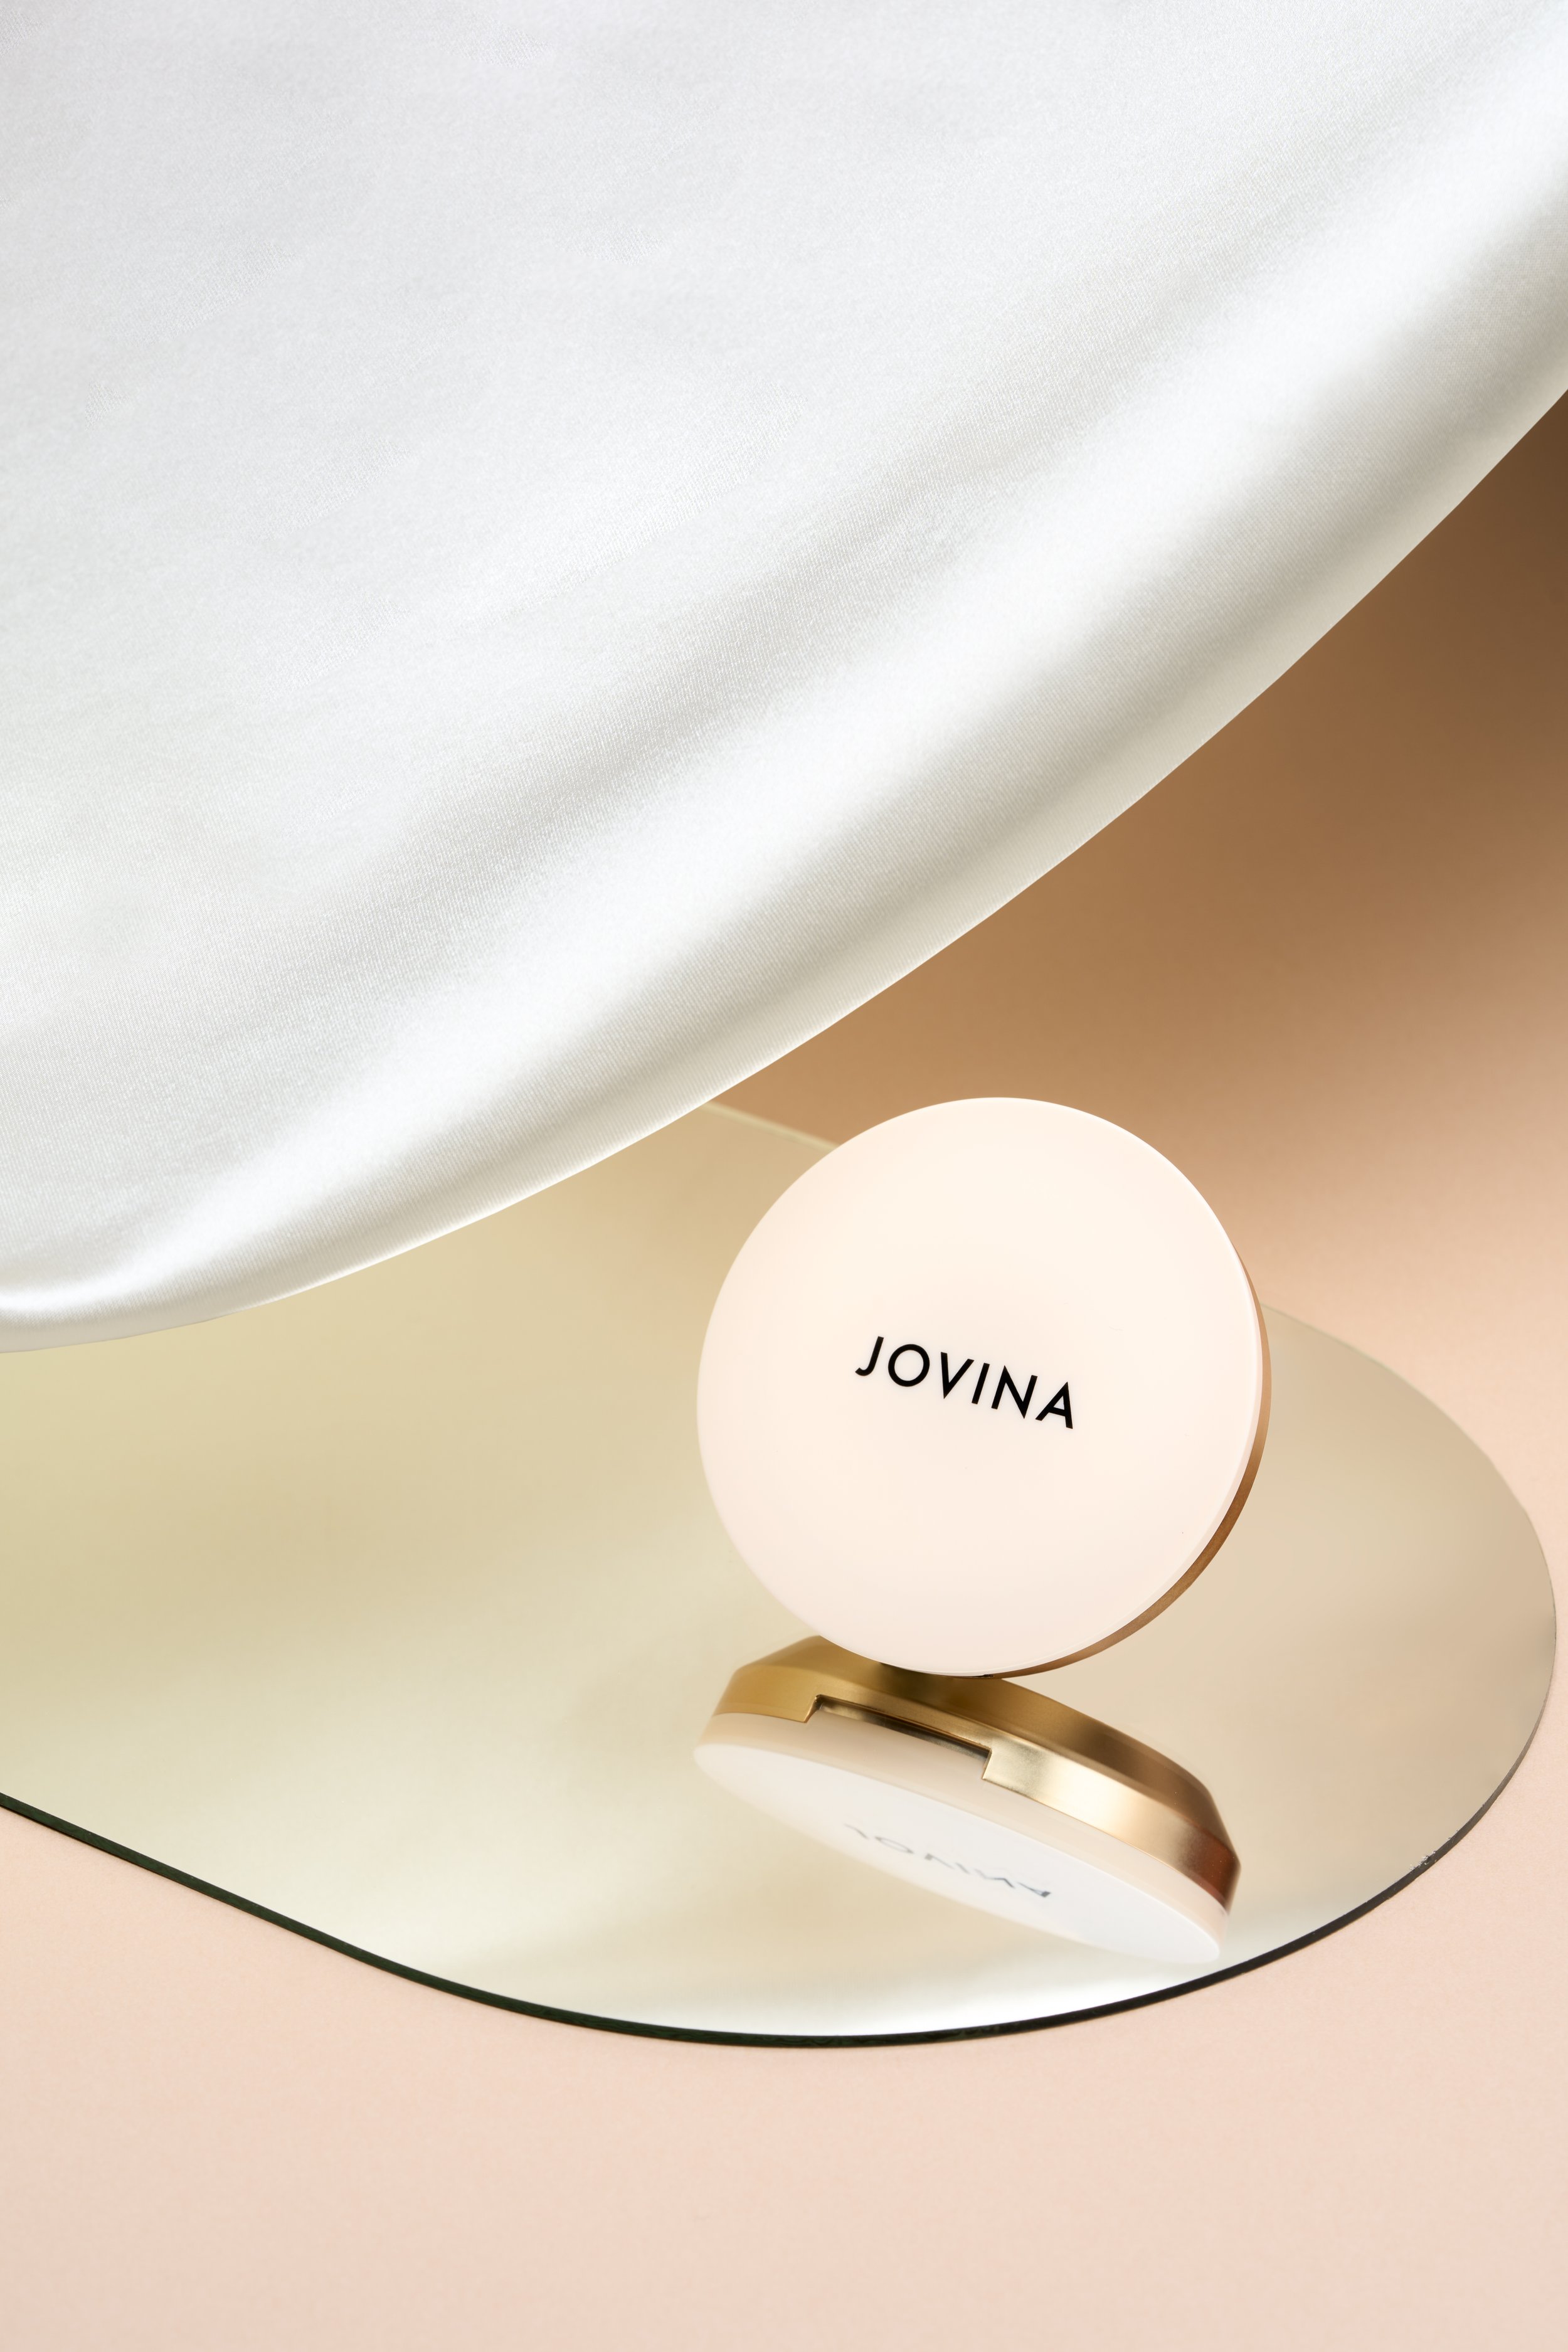 Jovina0234.jpg